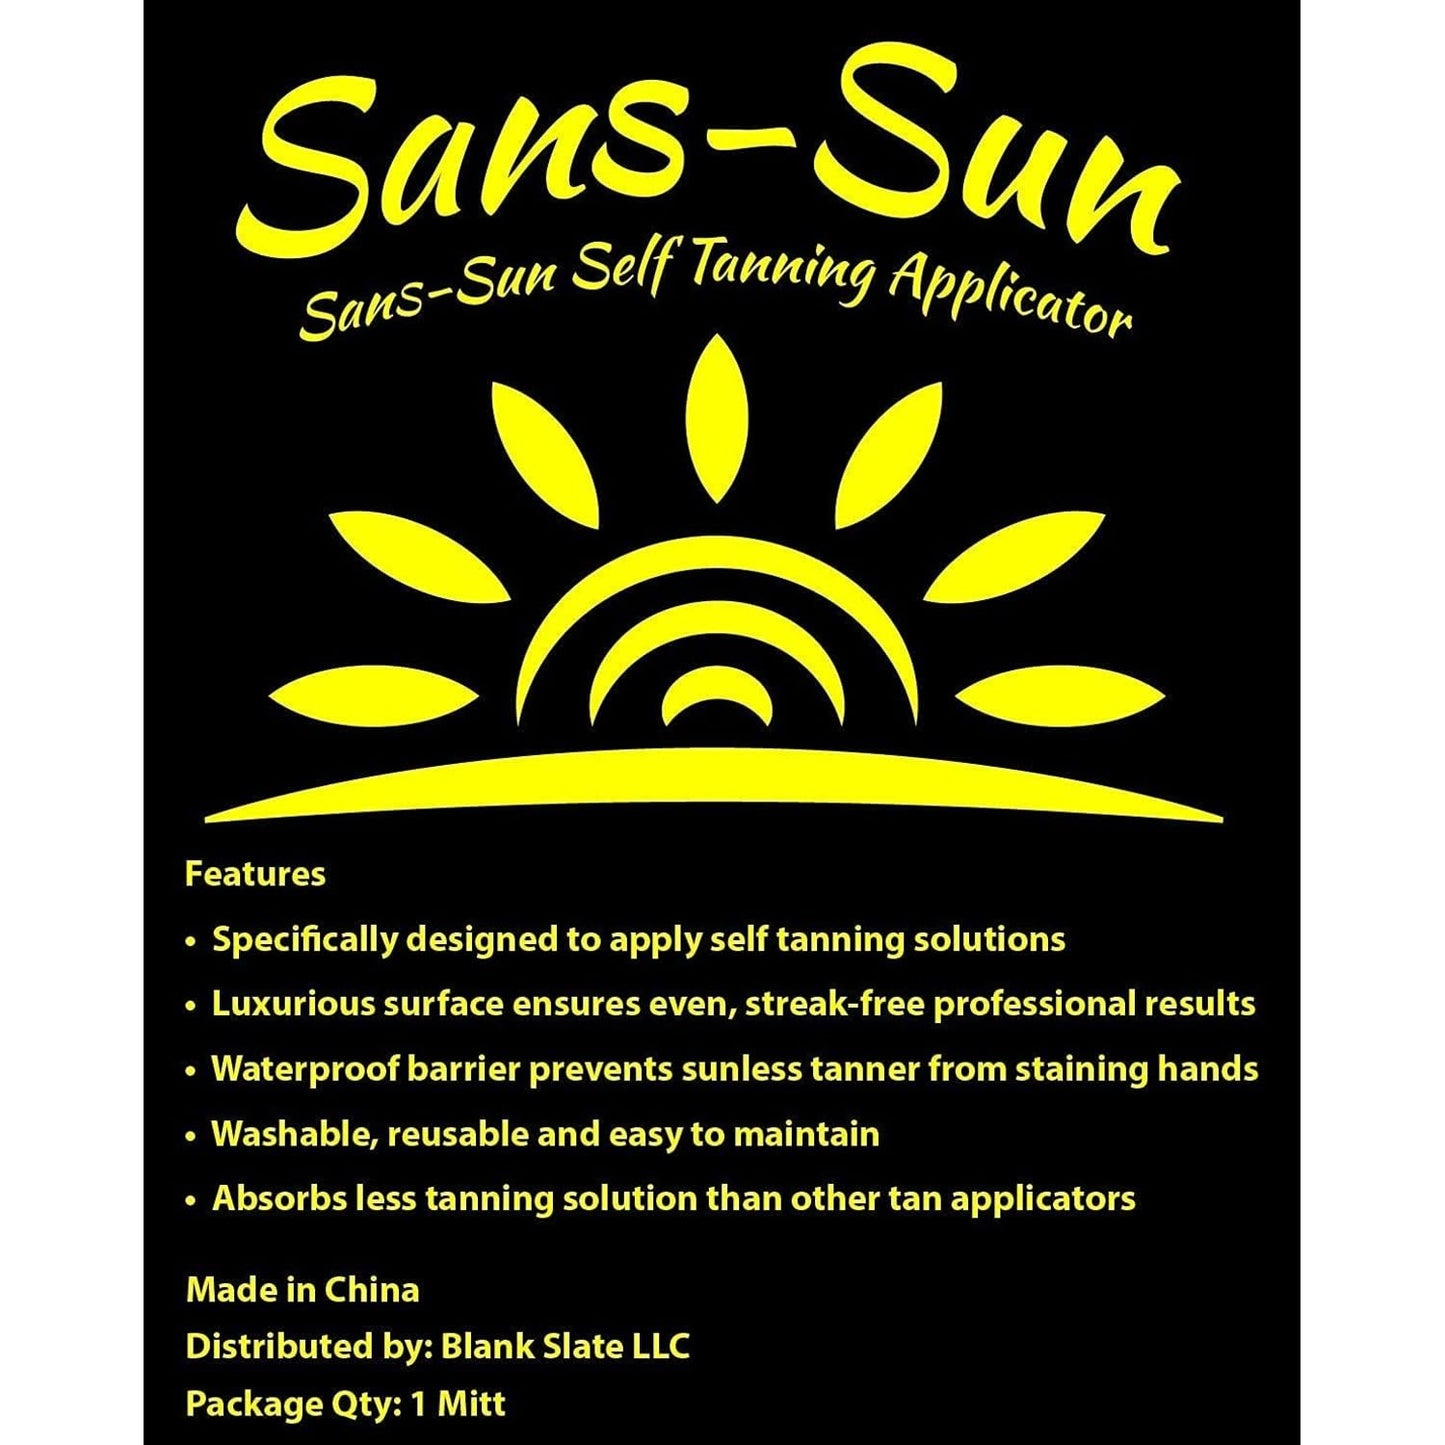 Tan Physics True Color Tanner 8 oz w/ Tanning Mitt by Sans-Sun